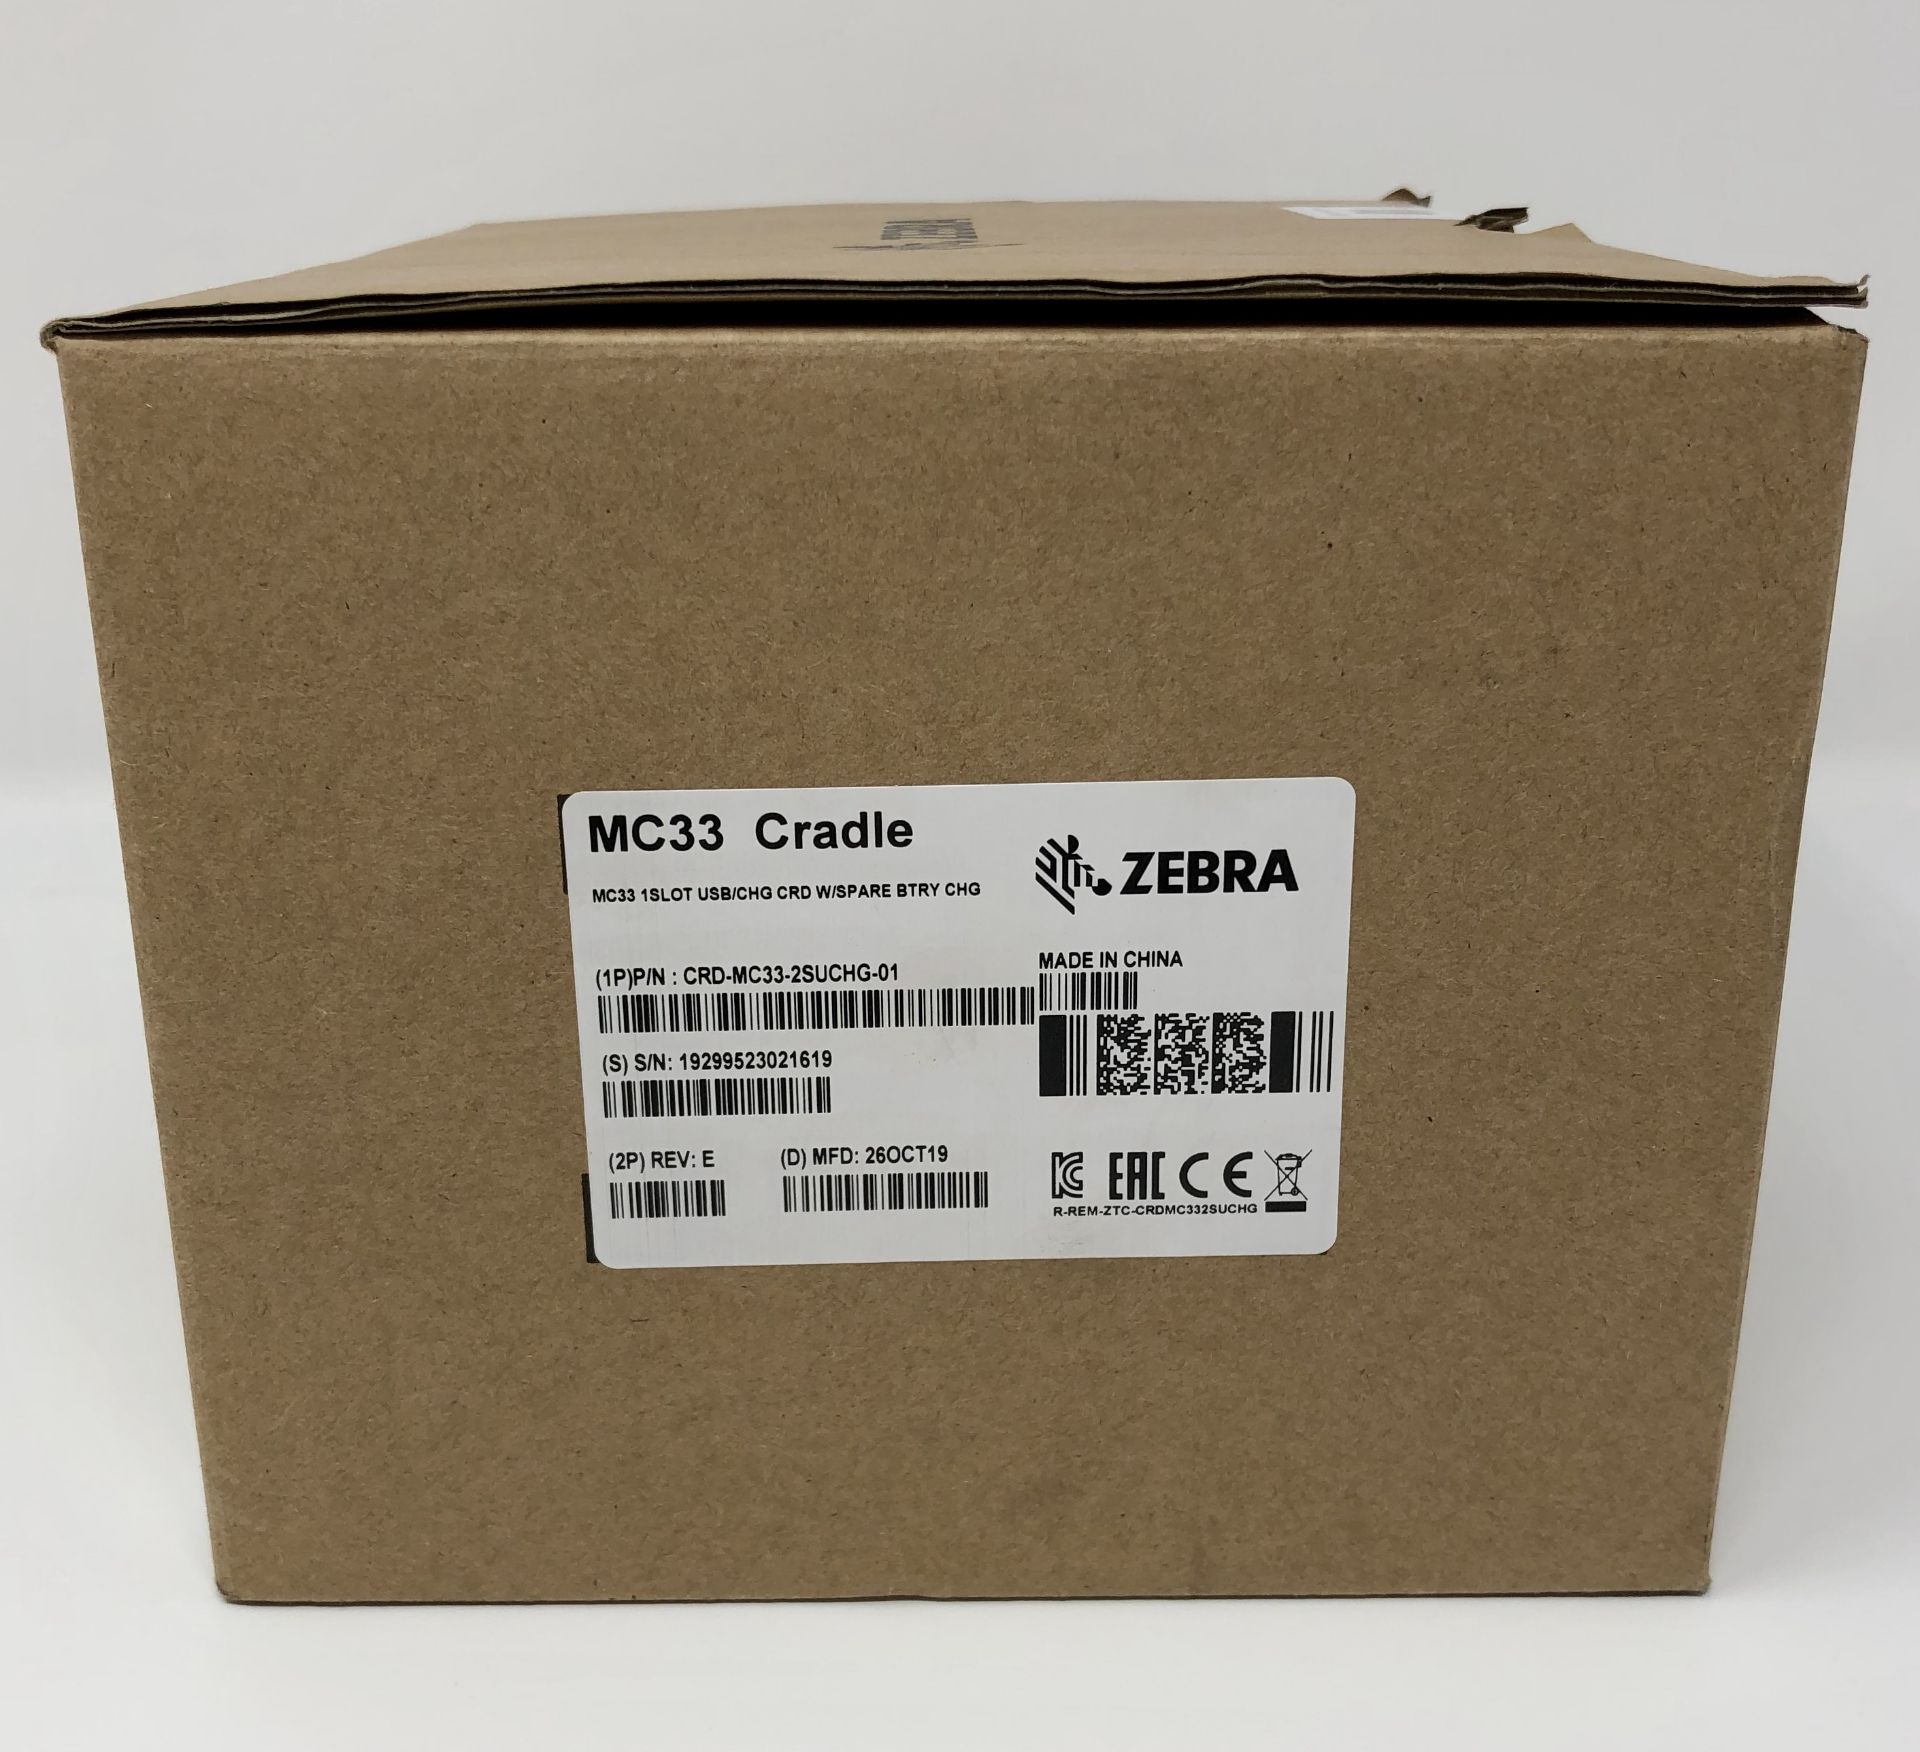 A boxed as new Zebra MC33 Single Slot USB Charging Cradle (Model: CRD-MC33-2SUCHG-01).